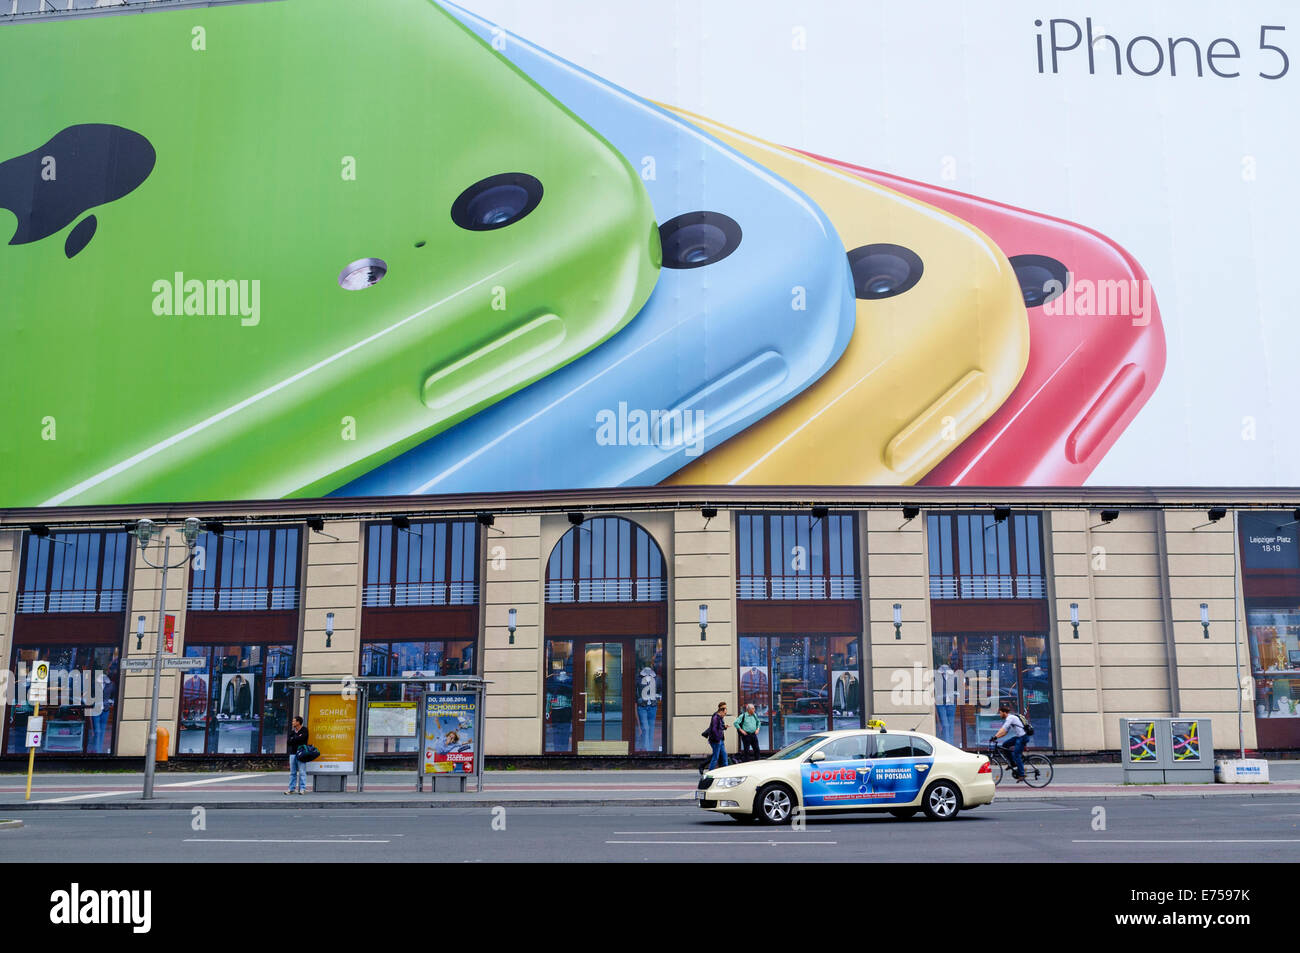 Large billboard advertising iPhone 5C at Potsdamer Platz in Berlin Germany Stock Photo